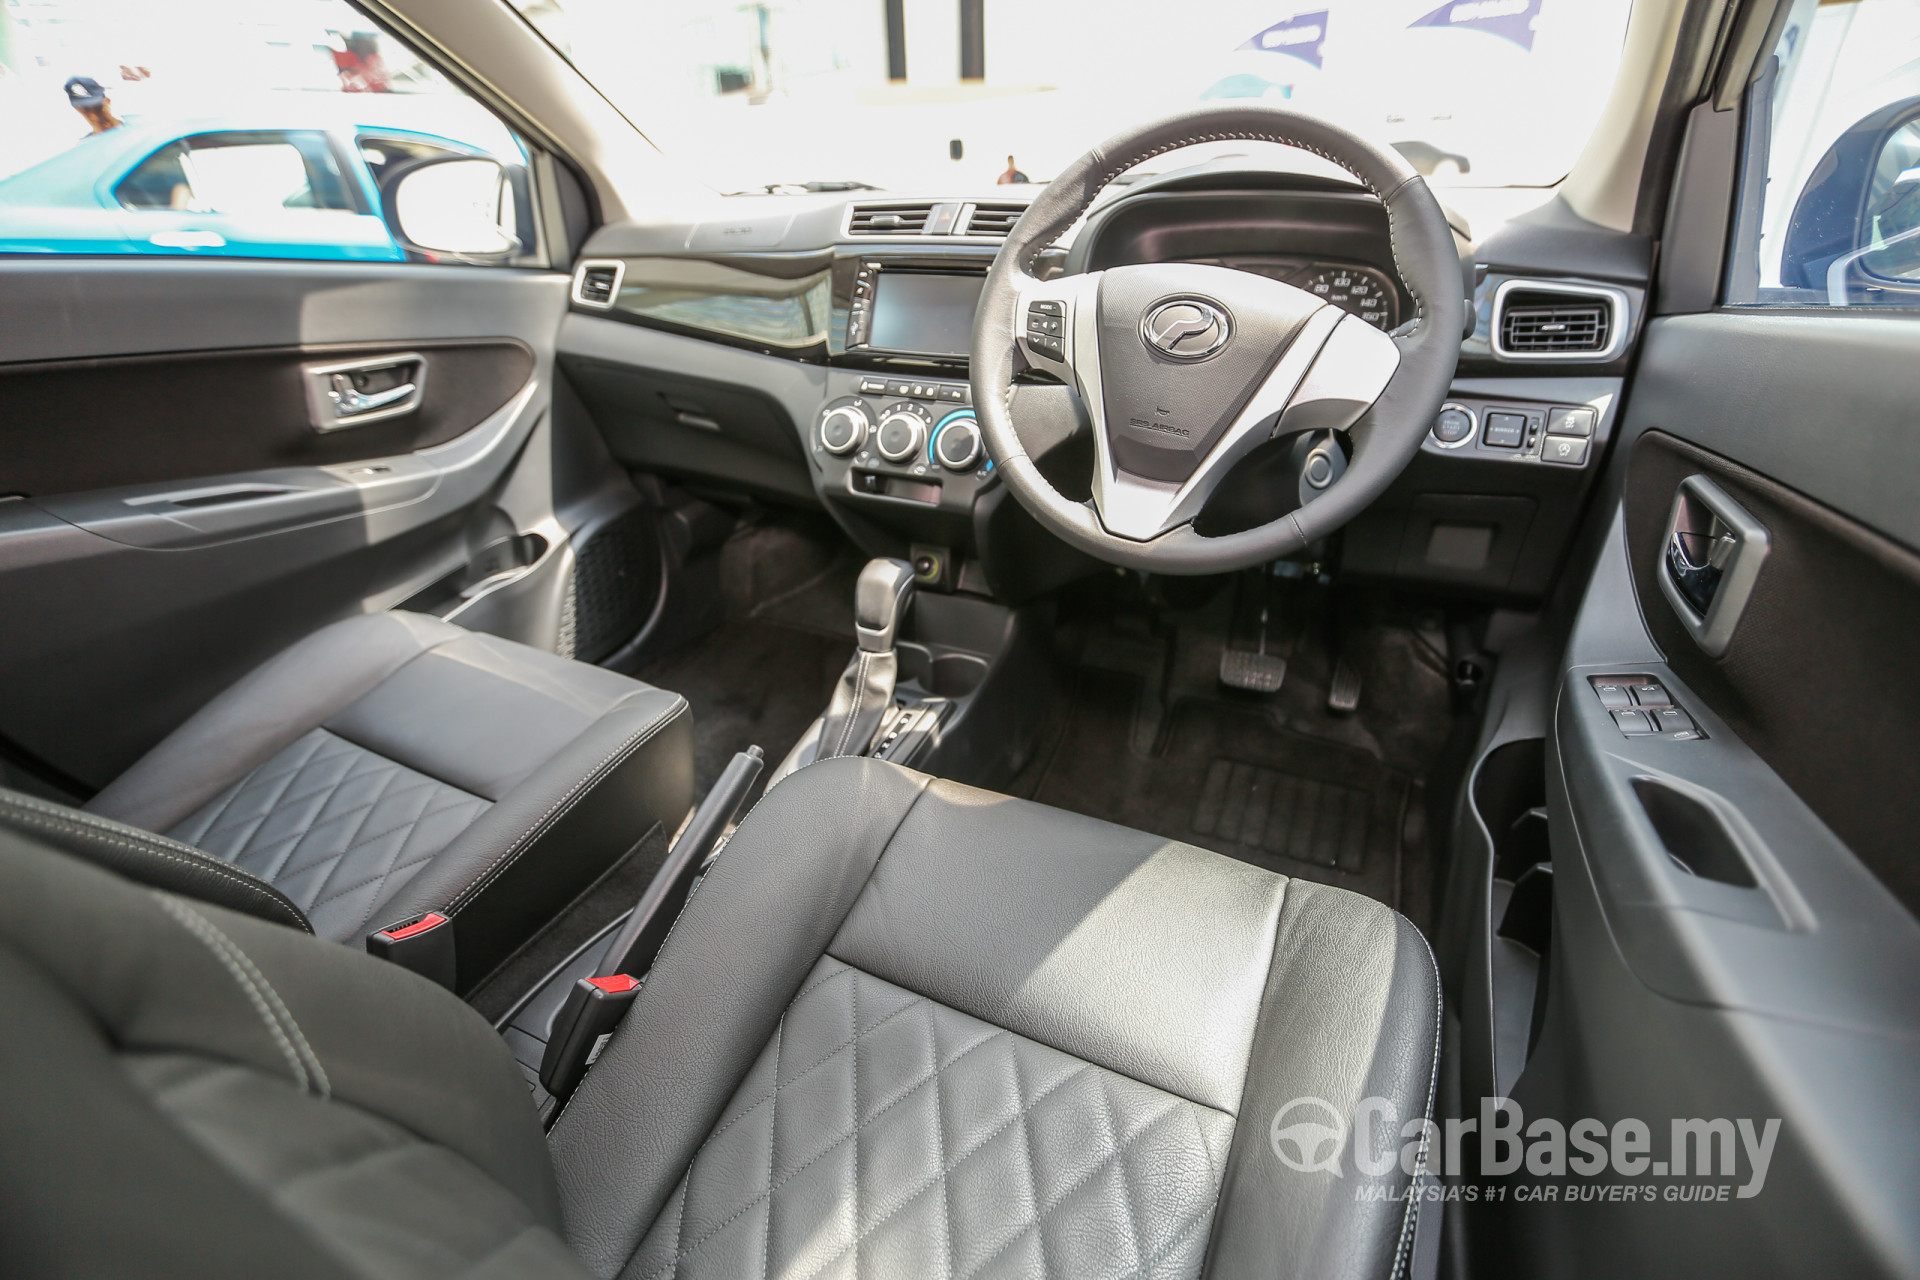 Perodua Bezza D63D (2016) Interior Image #31152 in Malaysia  Reviews